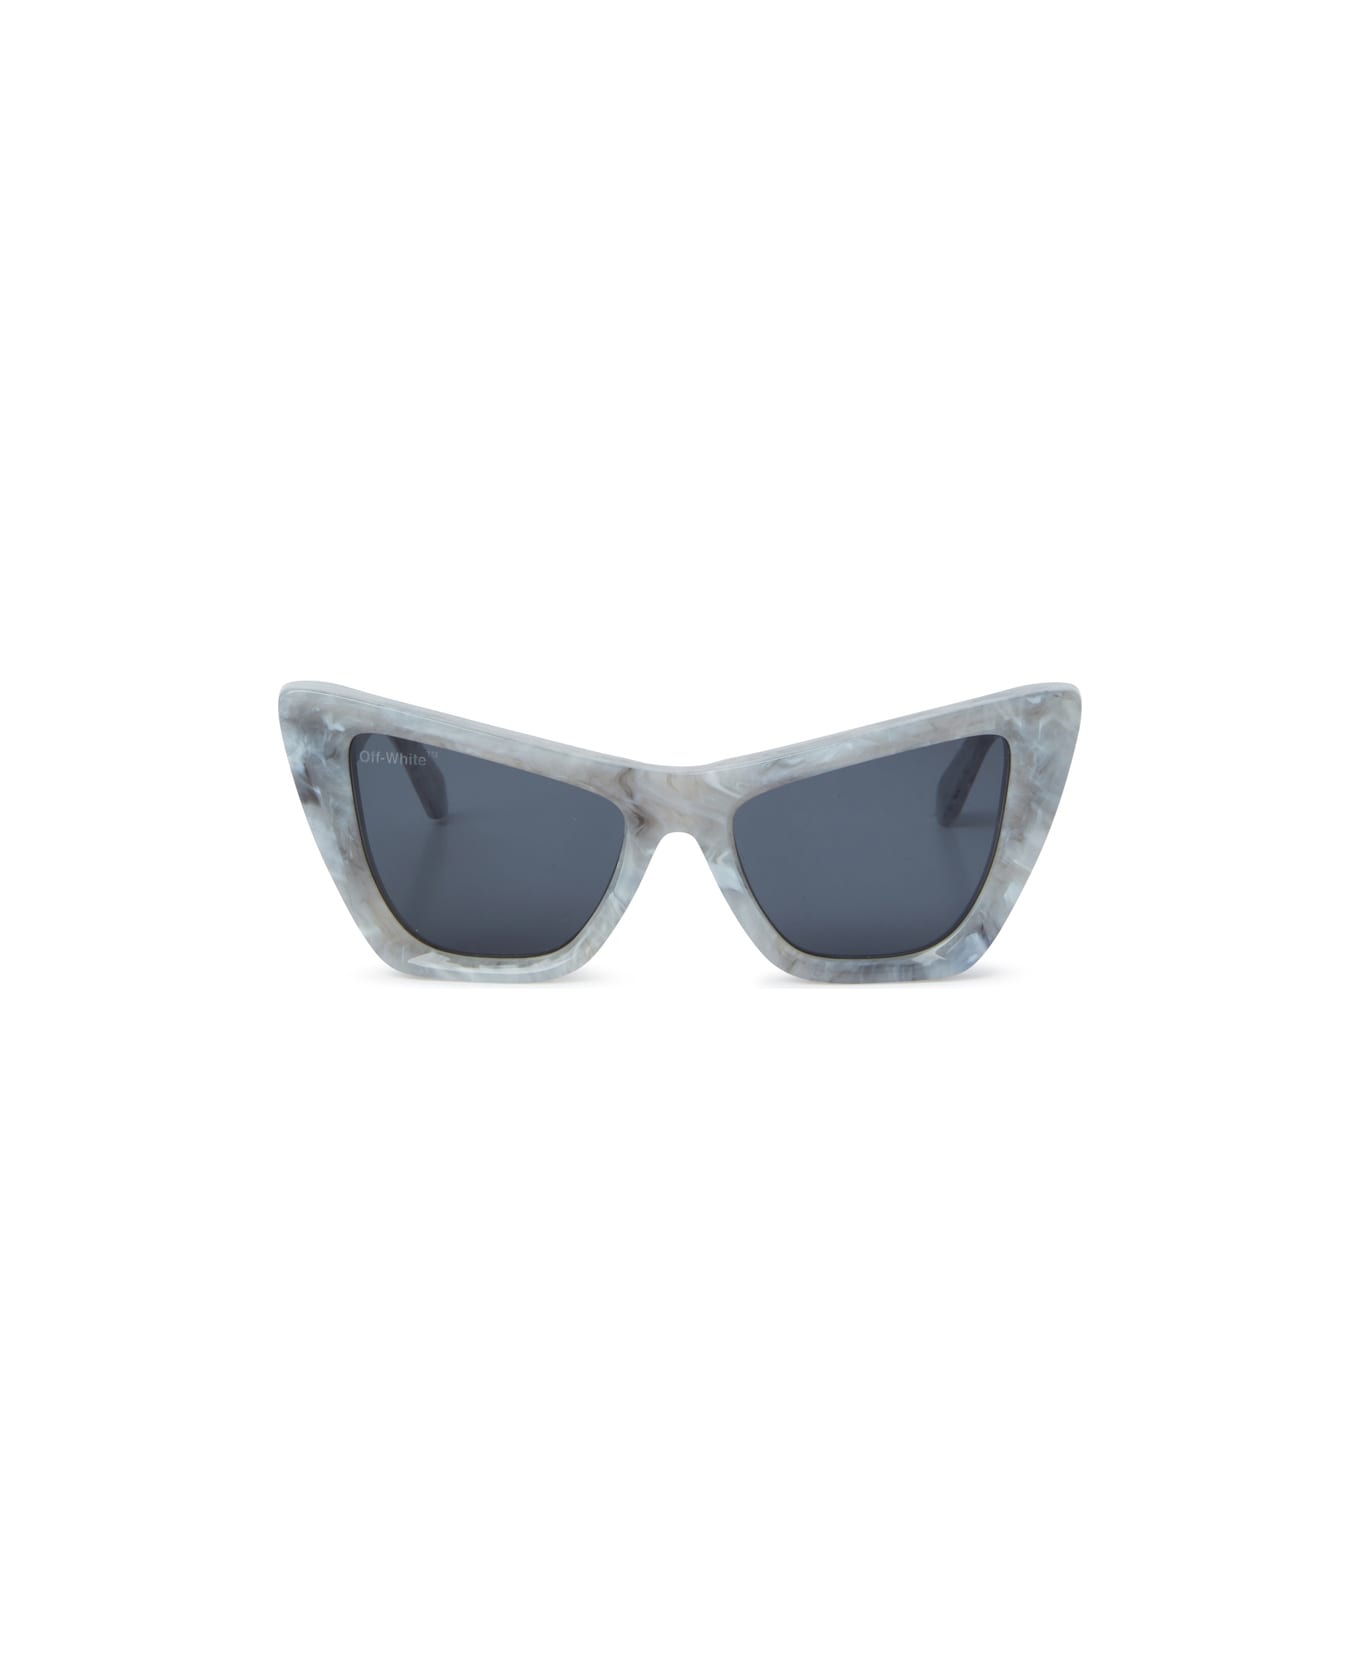 Off-White EDVARD SUNGLASSES Sunglasses - Marble